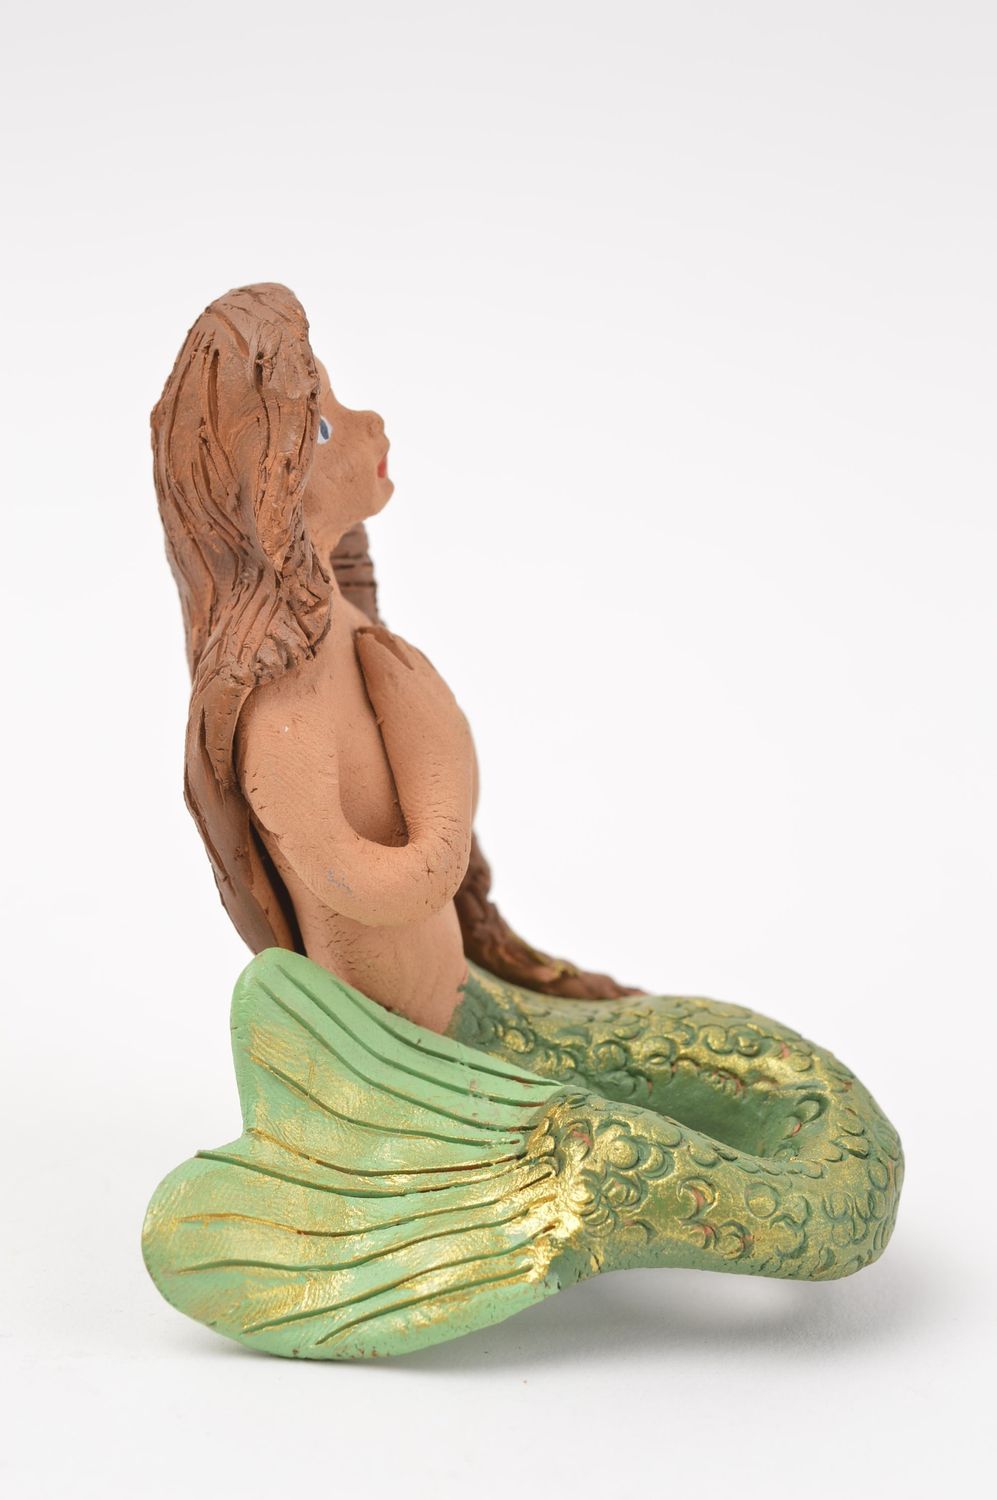 Handmade mermaid statuette figurine for interior clay figure handmade souvenir photo 2